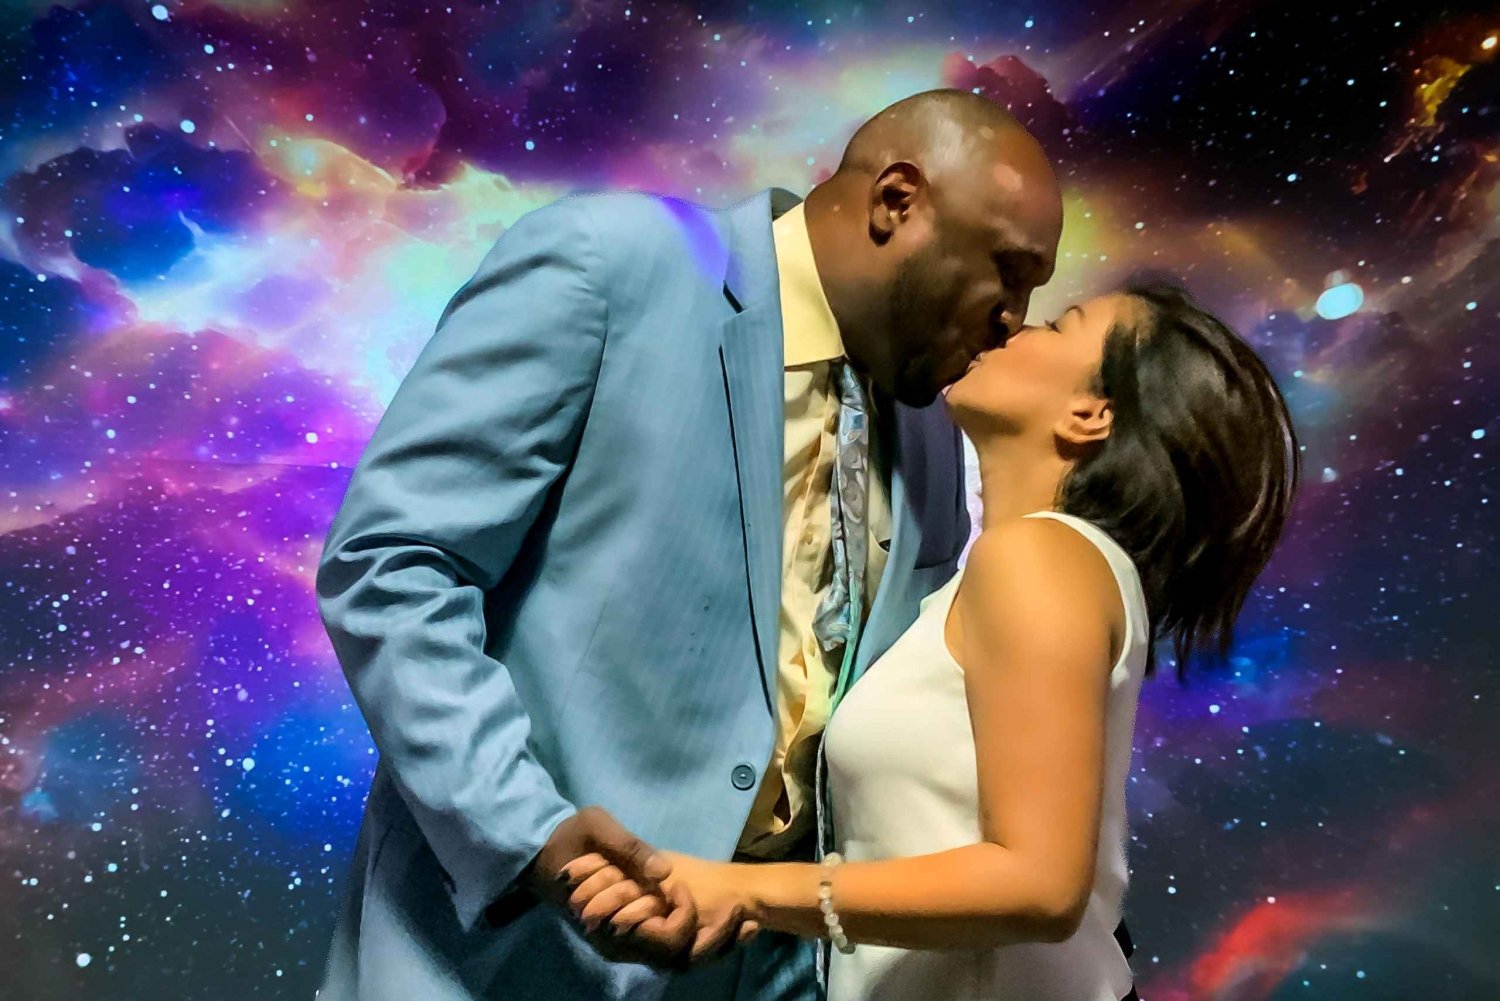 Las Vegas: Cosmic Space Wedding + Spectacular Photography